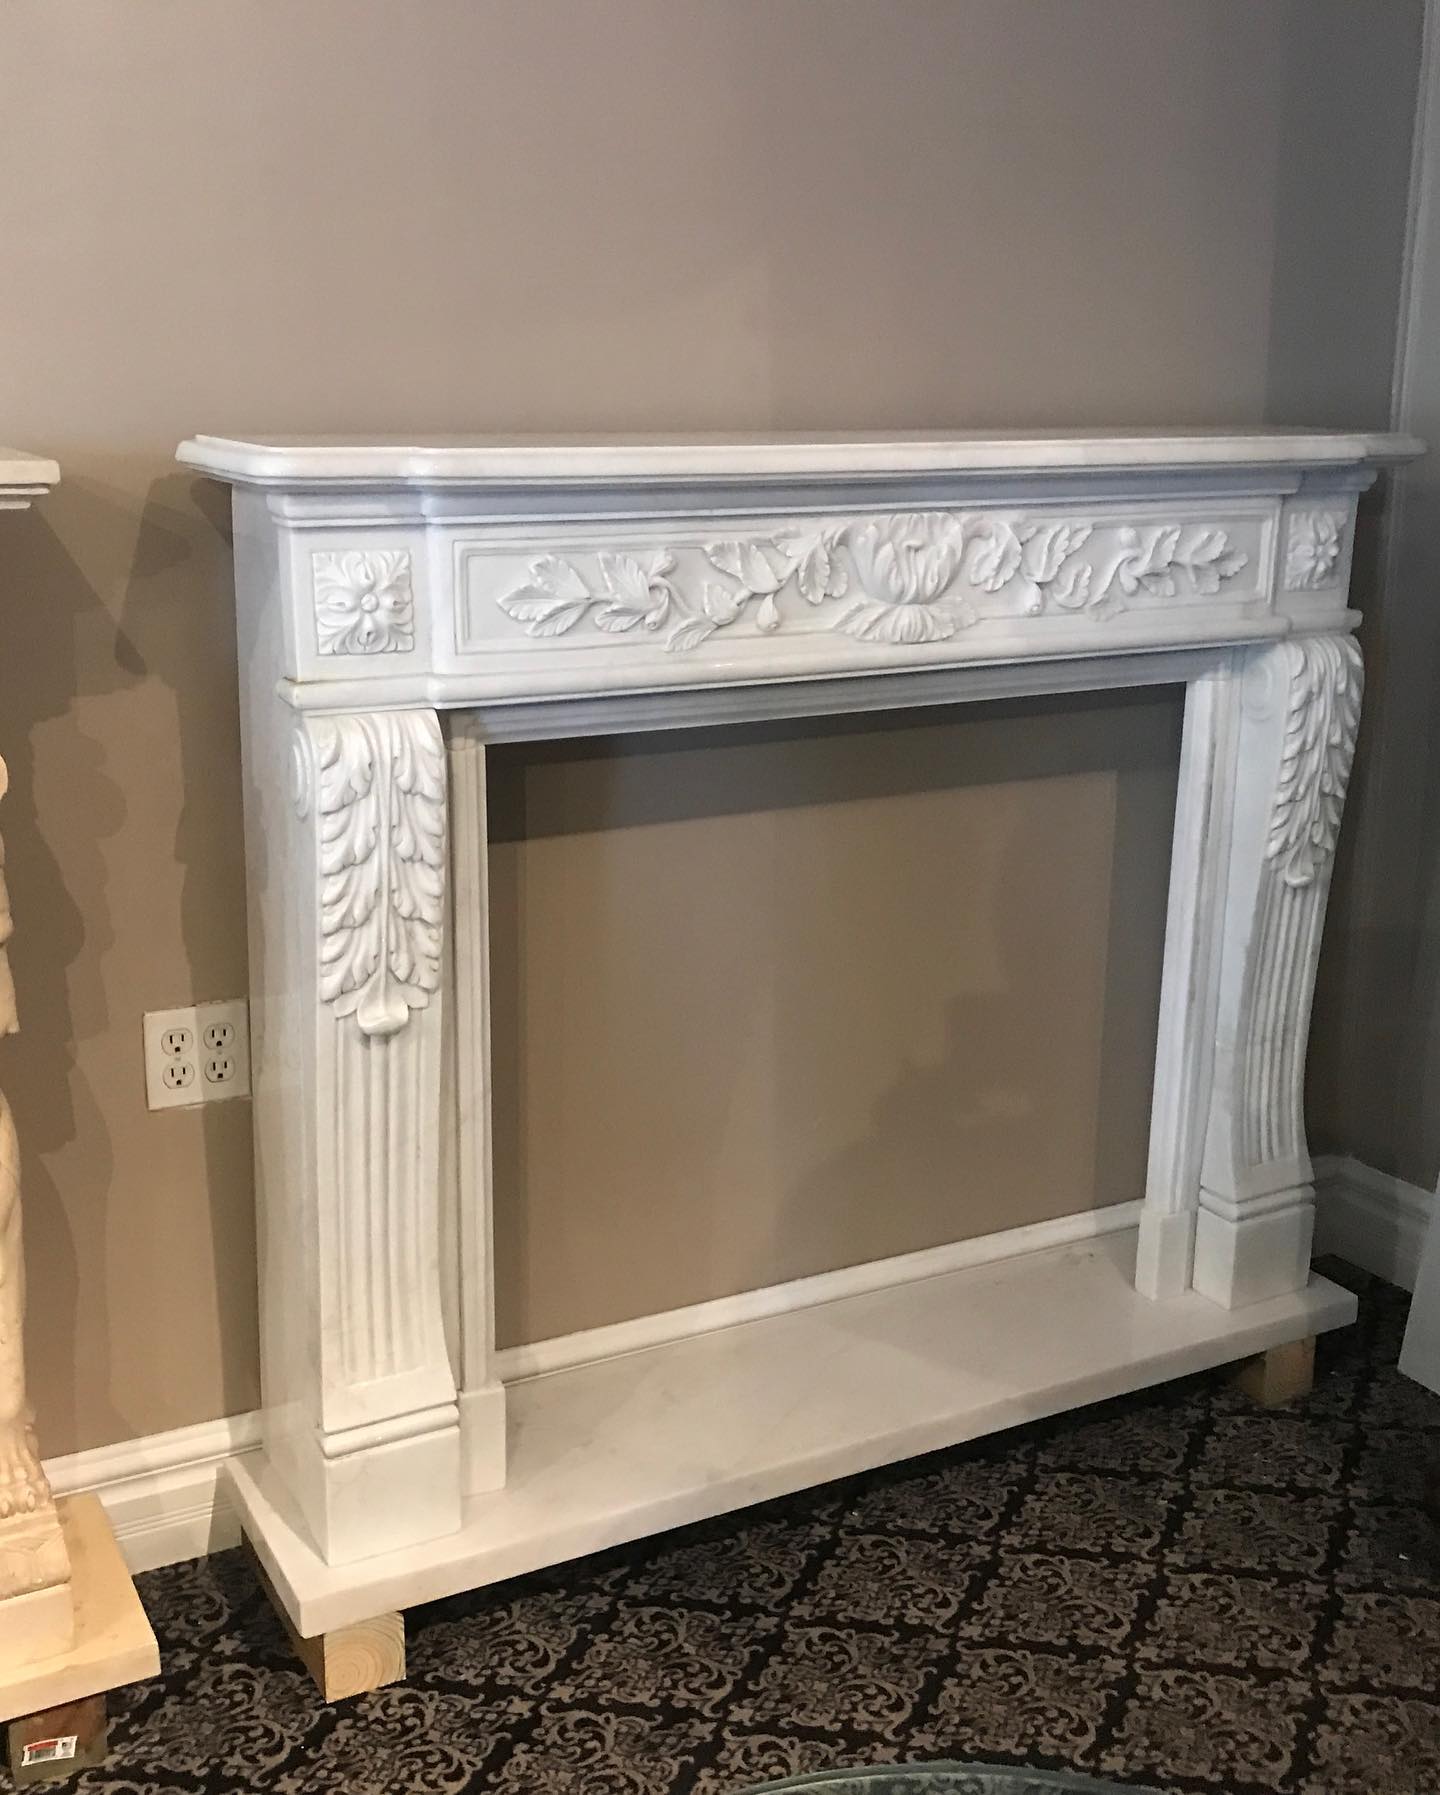 Fireplace mantel shelf